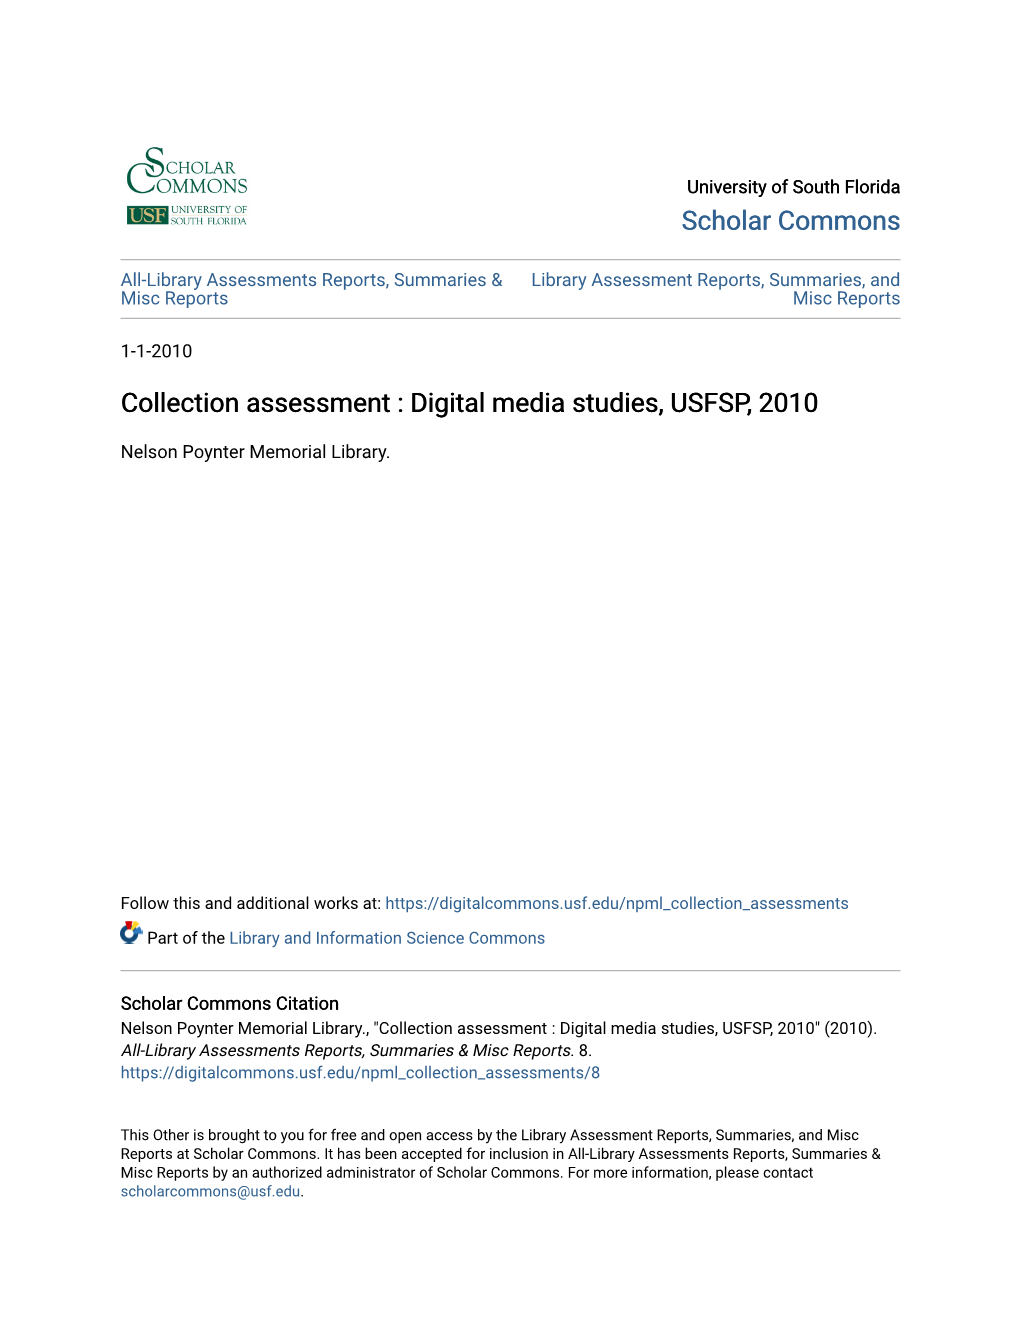 Collection Assessment : Digital Media Studies, USFSP, 2010